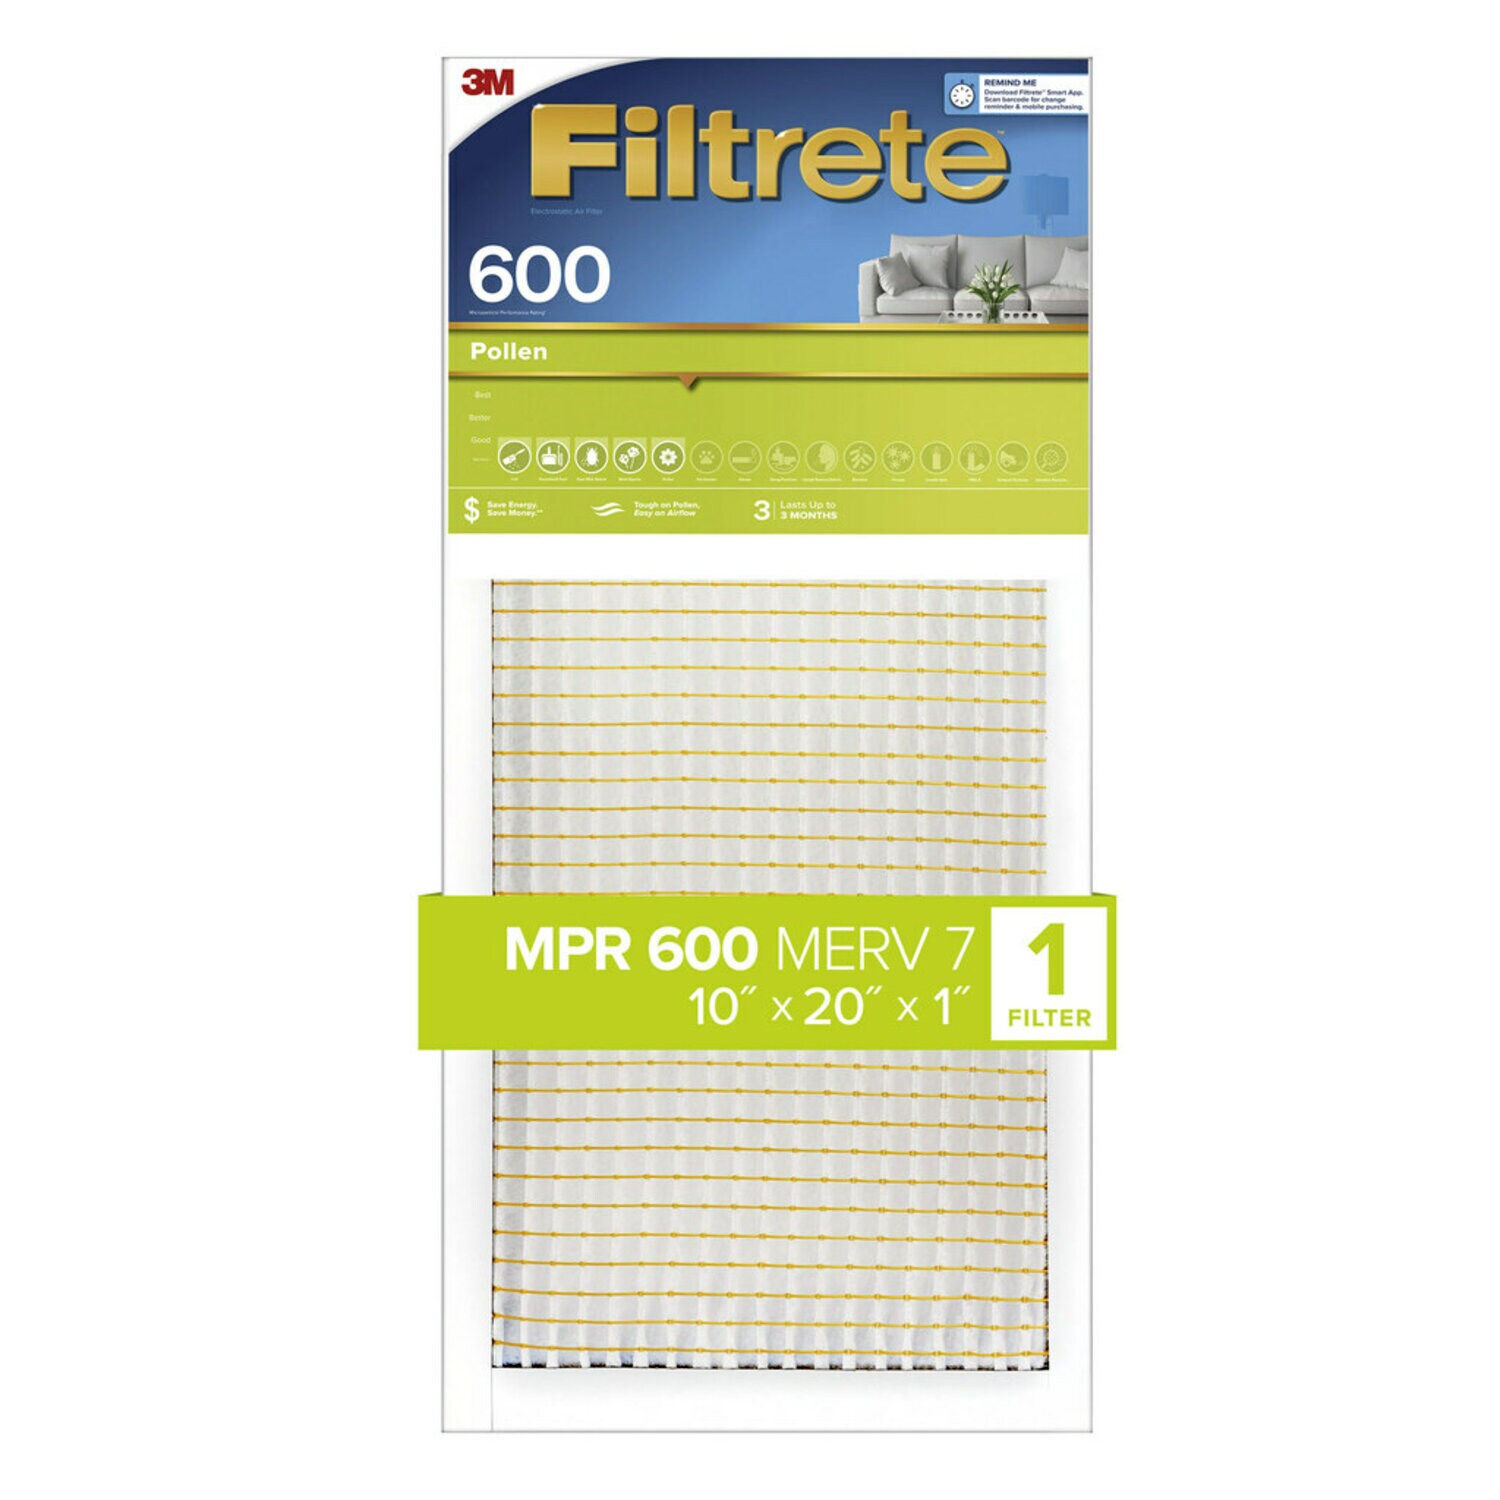 7100264711 - Filtrete Electrostatic Air Filter 600 MPR 9867DC-4, 10 in x 20 in x 1 in (25.4 cm x 50.8 cm x 2.5 cm)